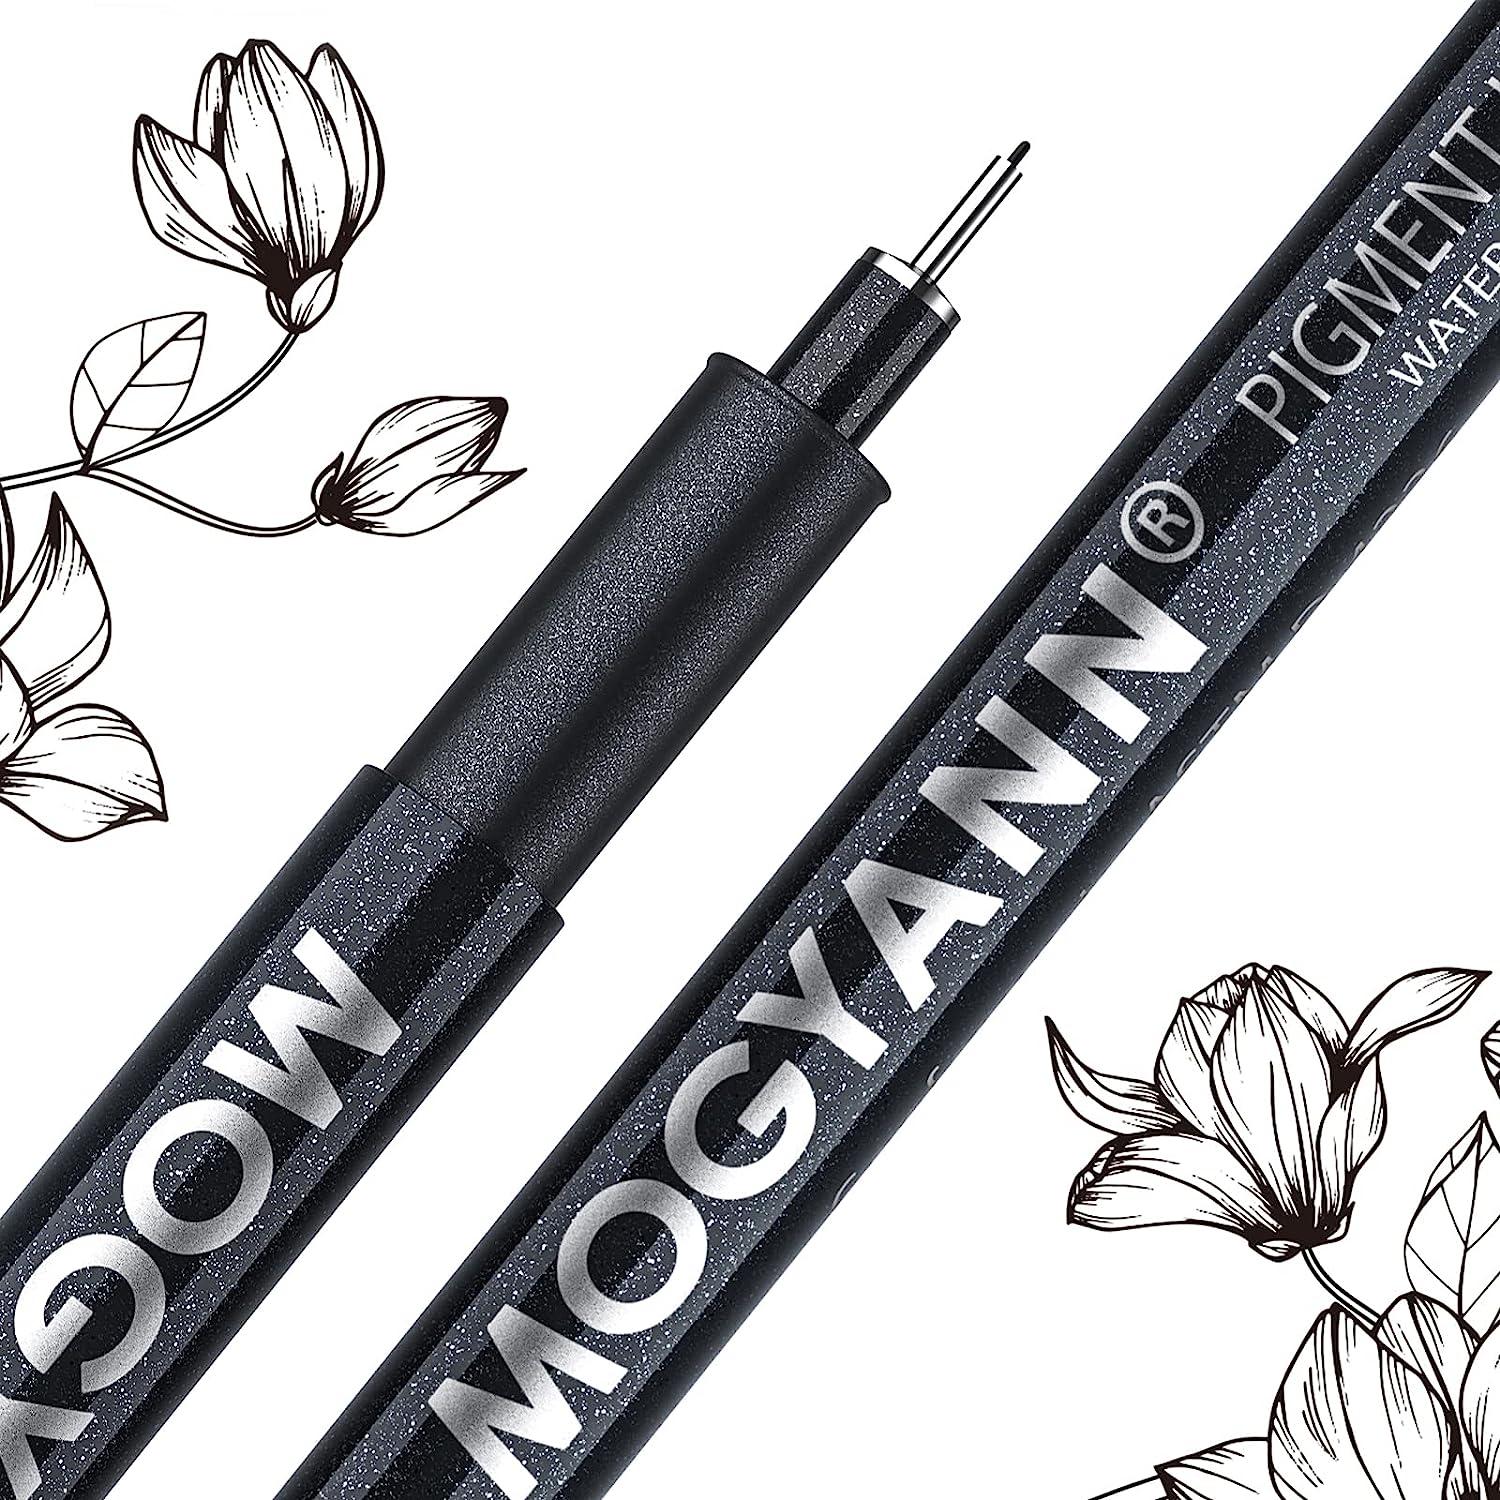 Mogyann Drawing Pens Black Art Pens for Drawing 12 Size Waterproof